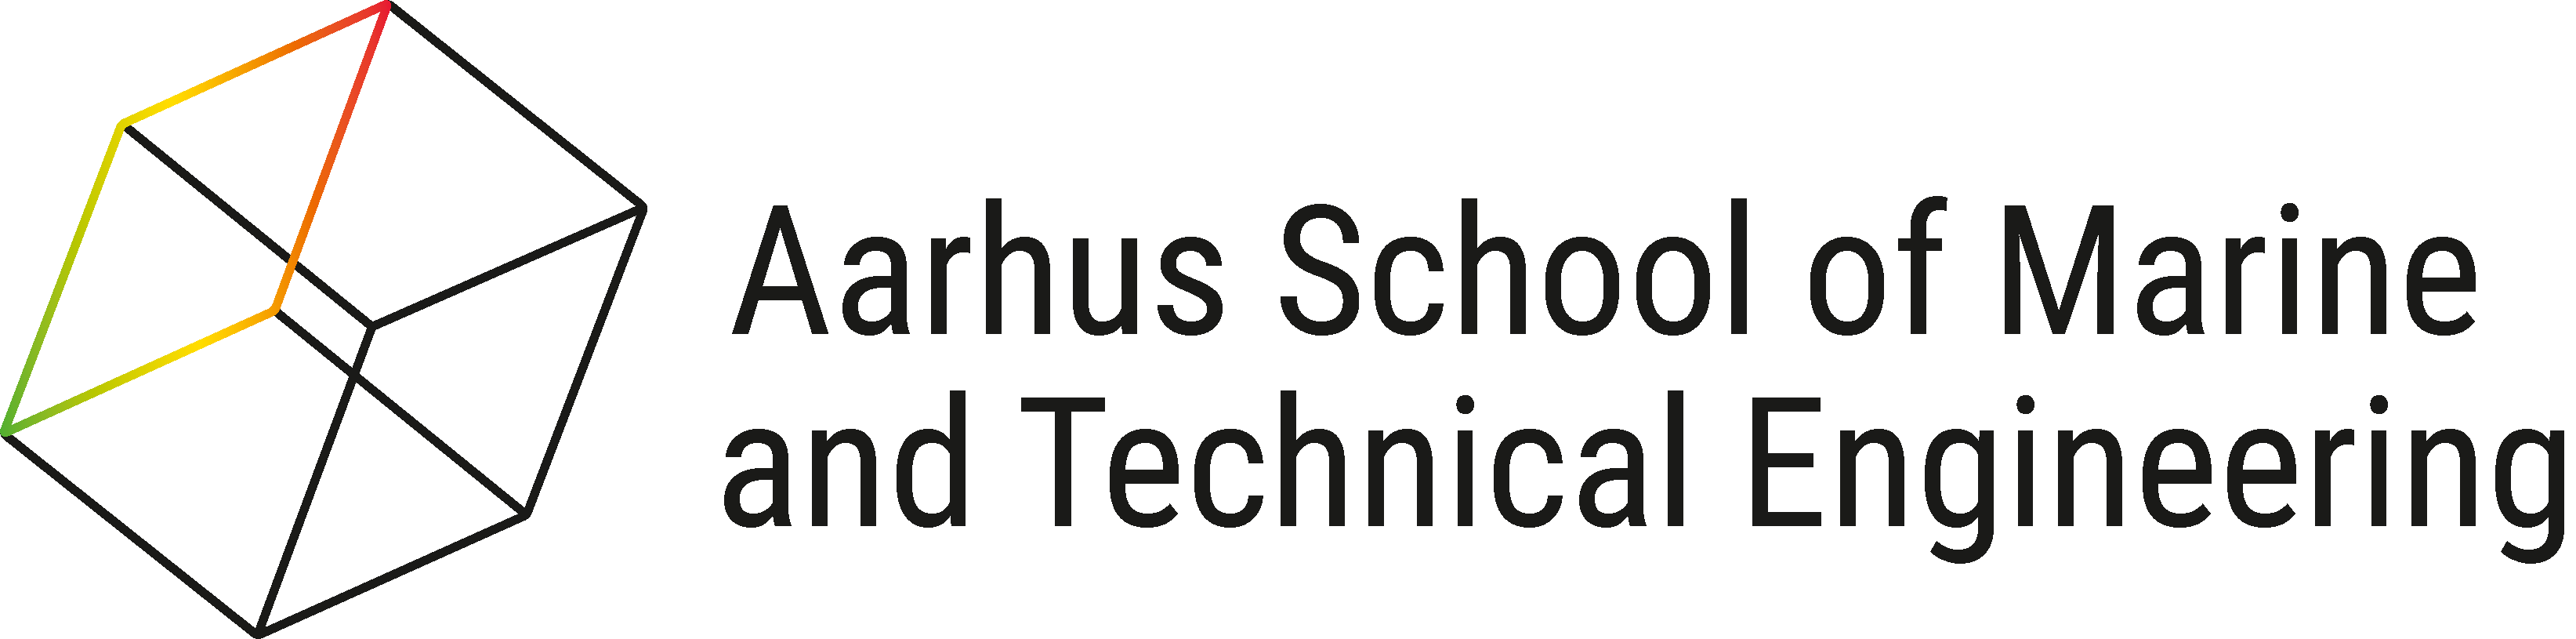 Aarhus School og Marine and Technical Engineering logo